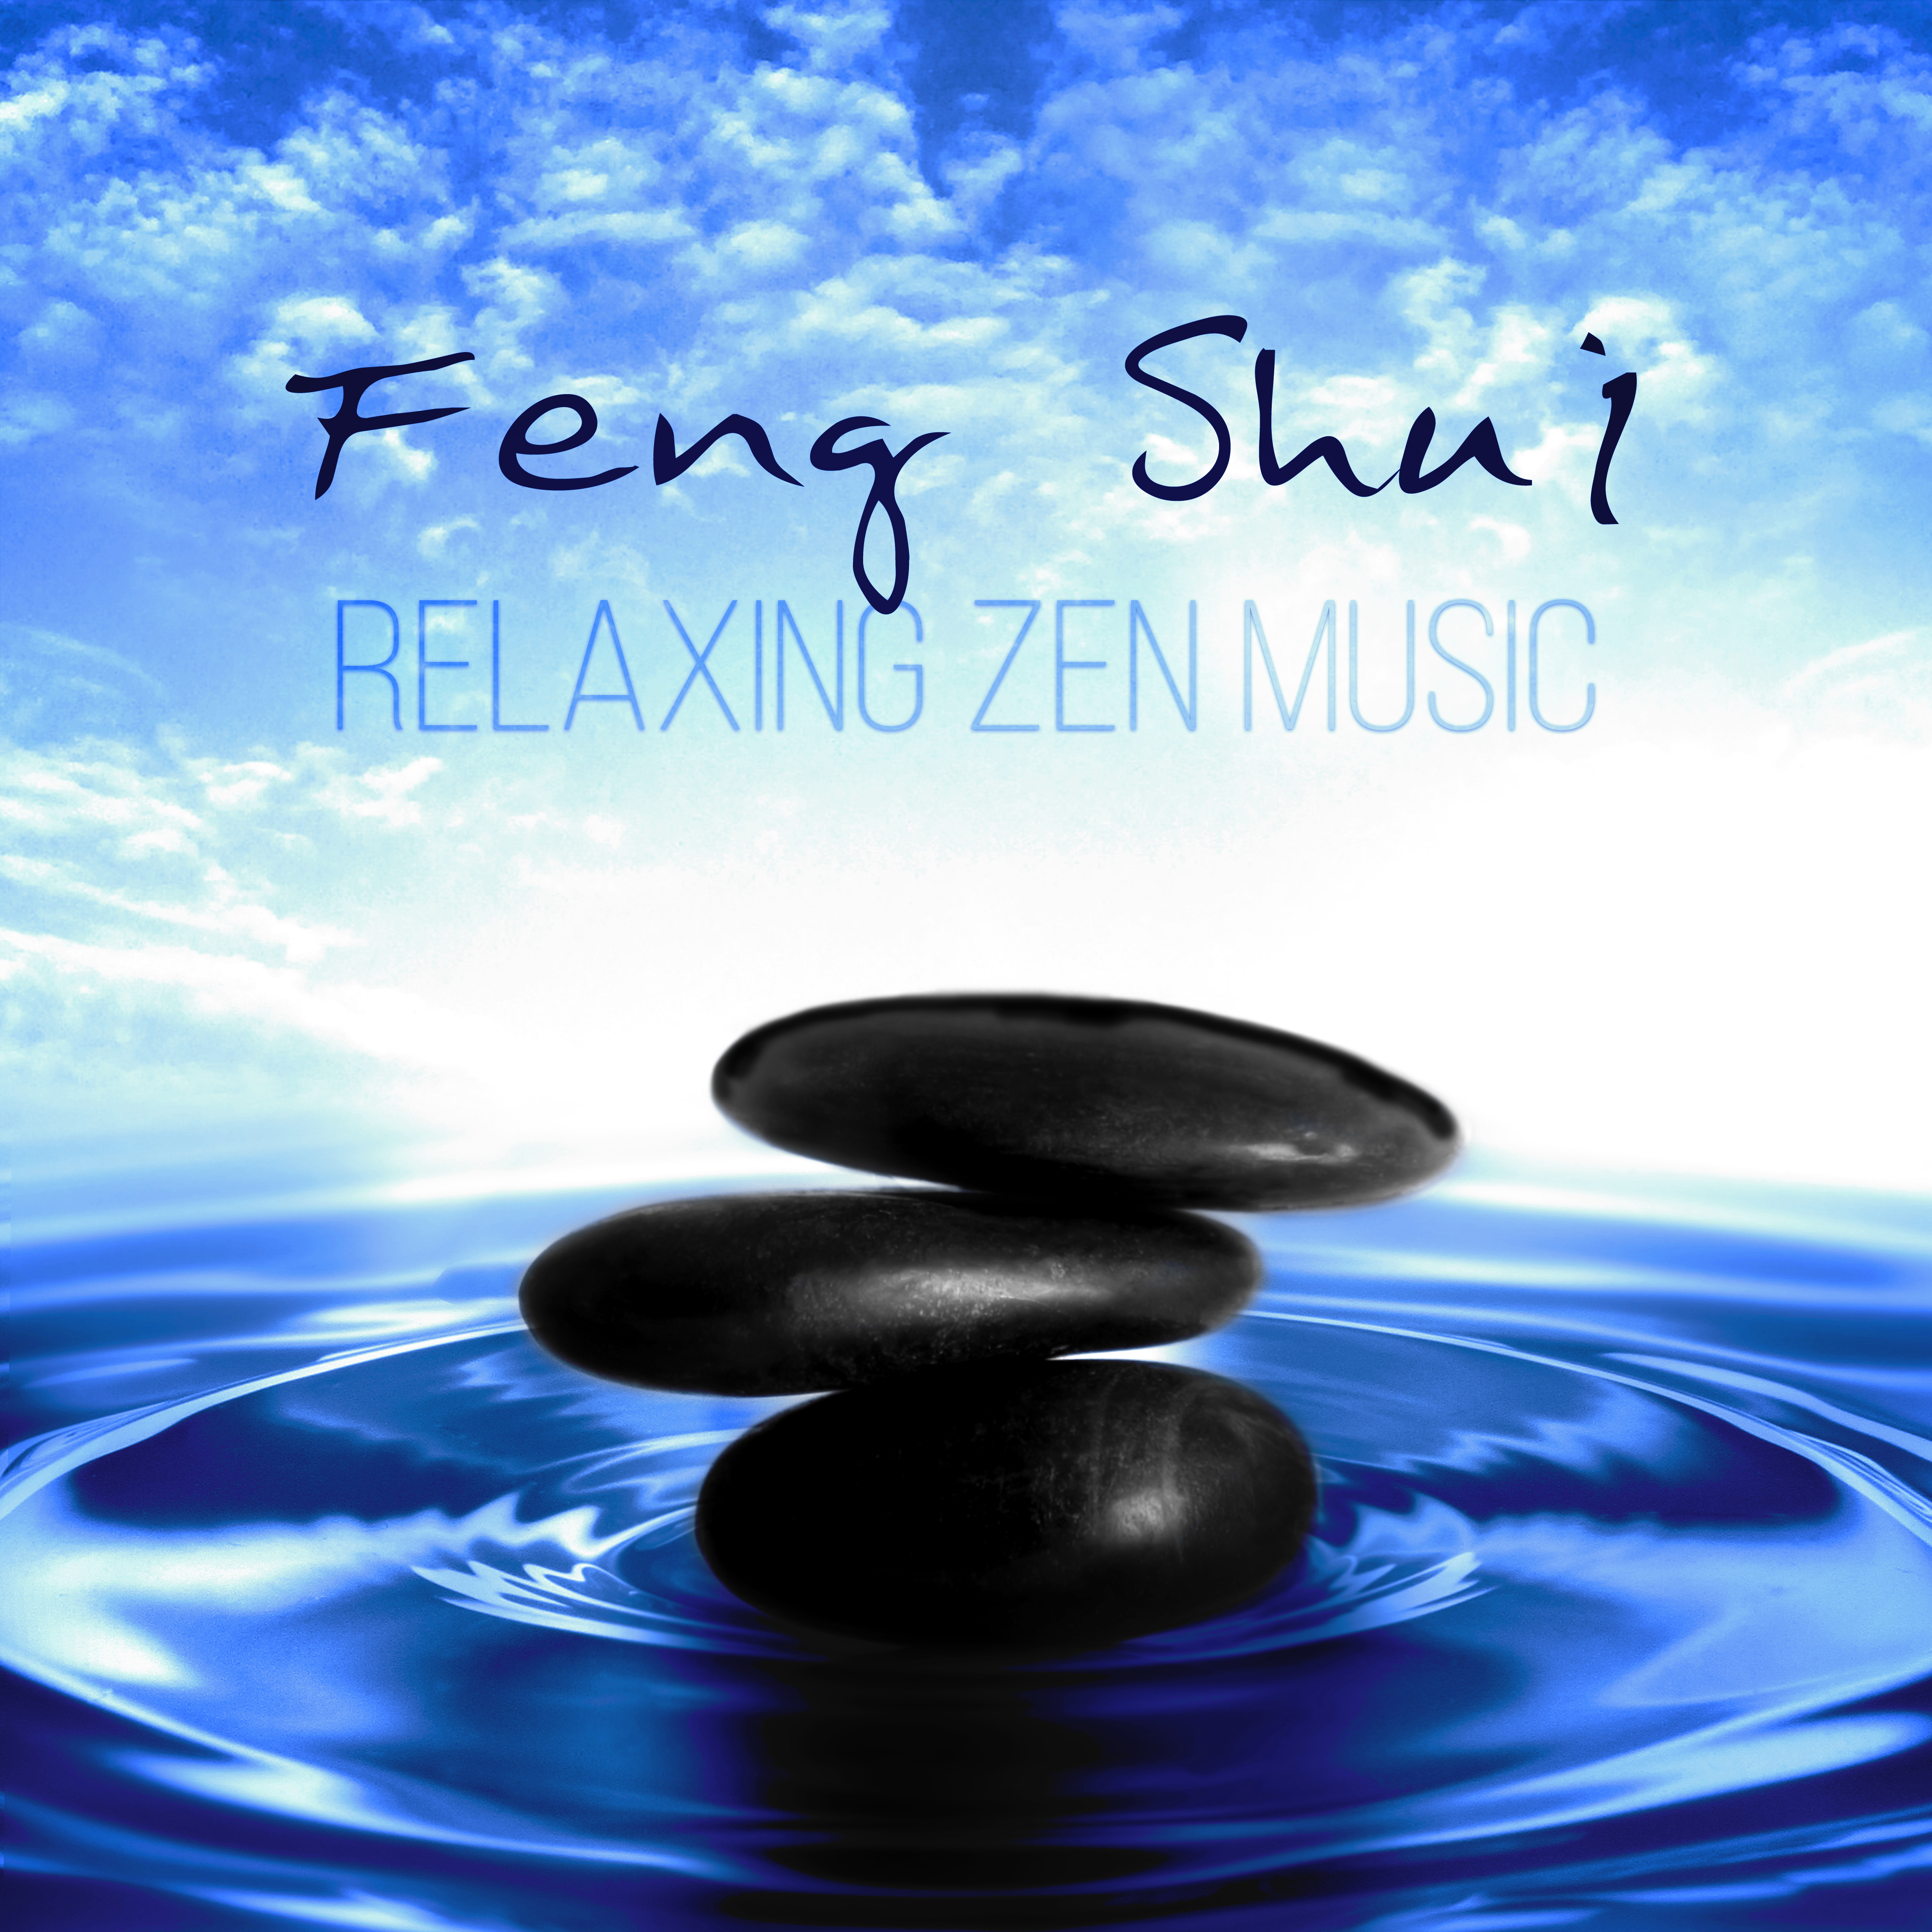 Feng Shui  Relaxing Zen Music, Yin Yang Balance, Relax with Nature Sounds, Mindfulness Meditation, Yoga, Reiki, Spa, Wellness, Massage